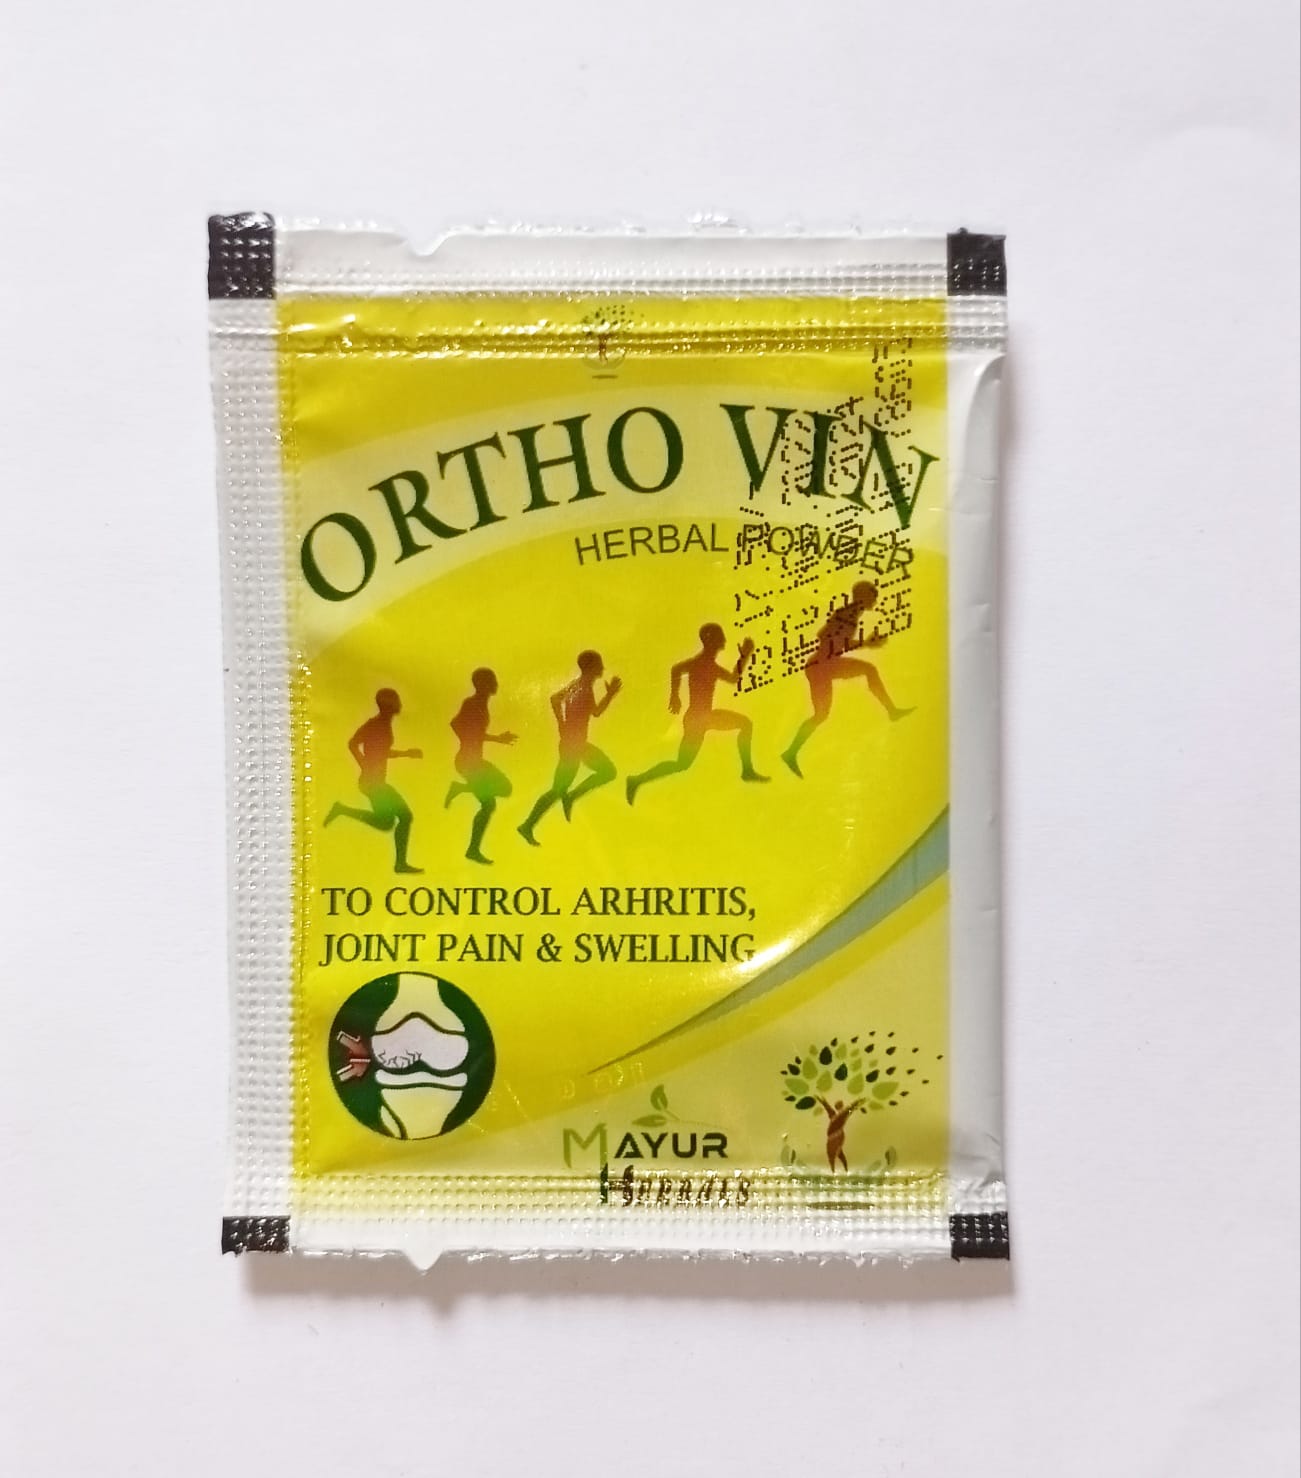 Herbal Ortho Vin Care